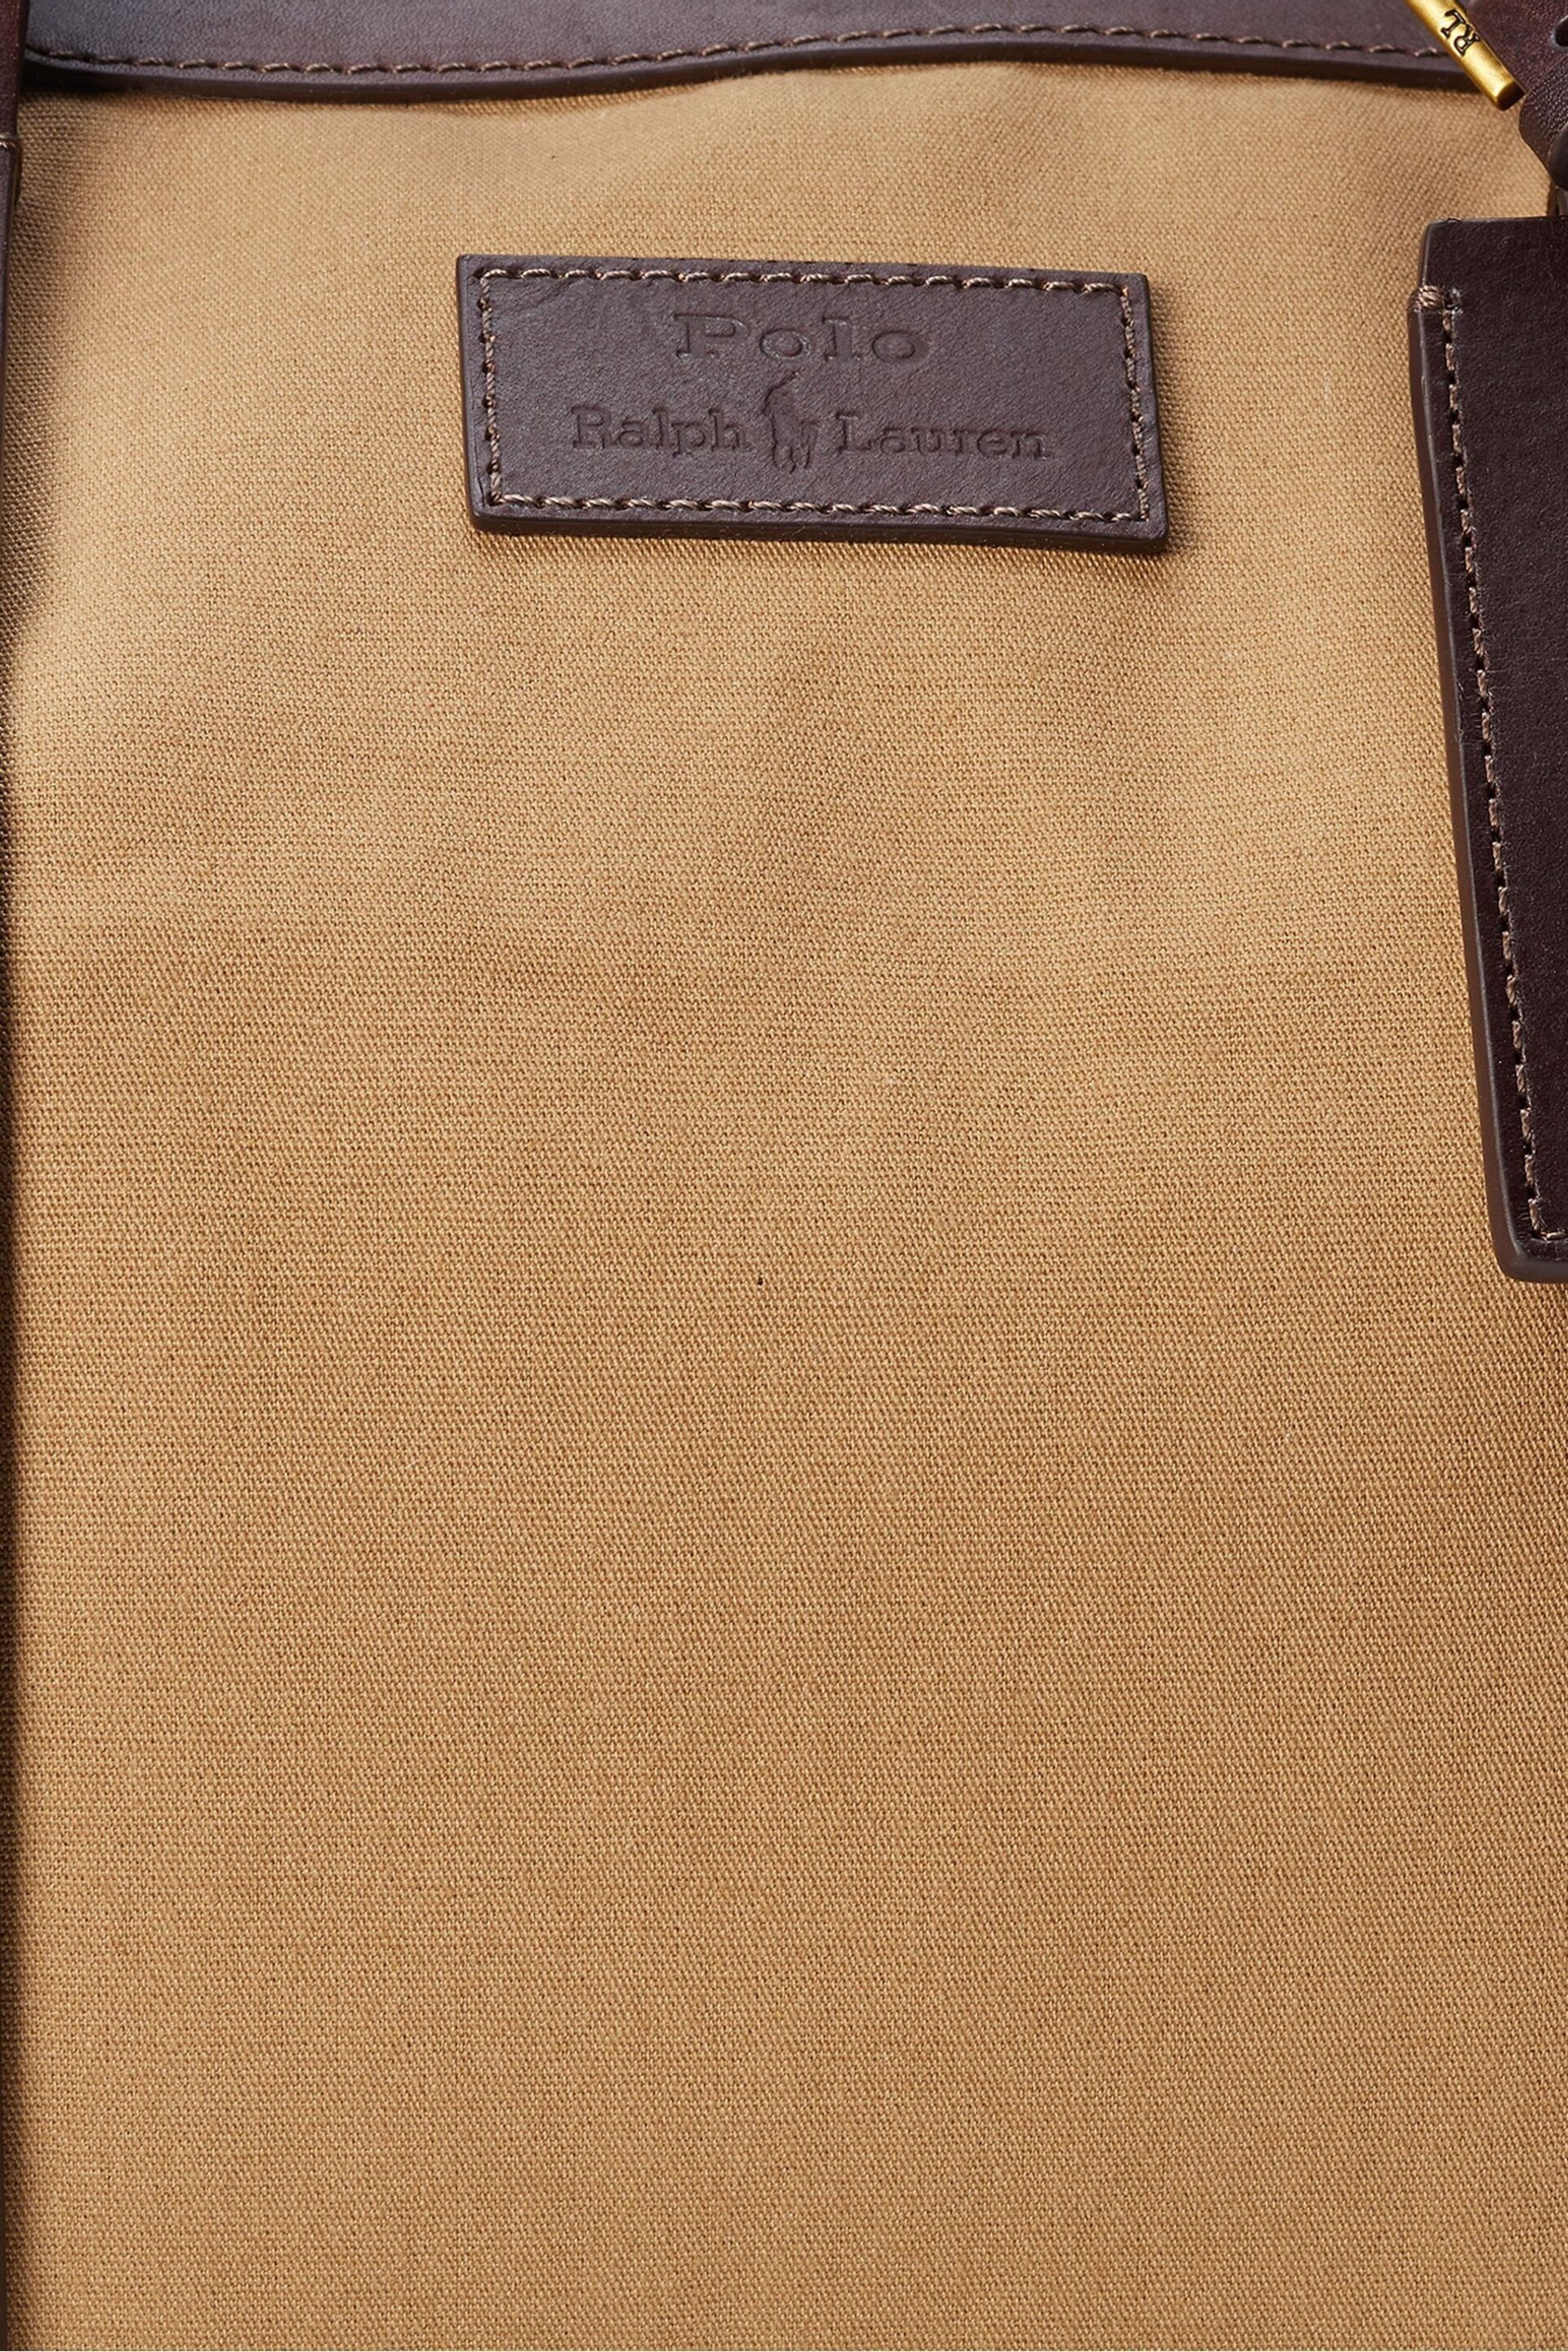 Polo Ralph Lauren Leather-Trim Canvas Duffel Bag - Image 6 of 6